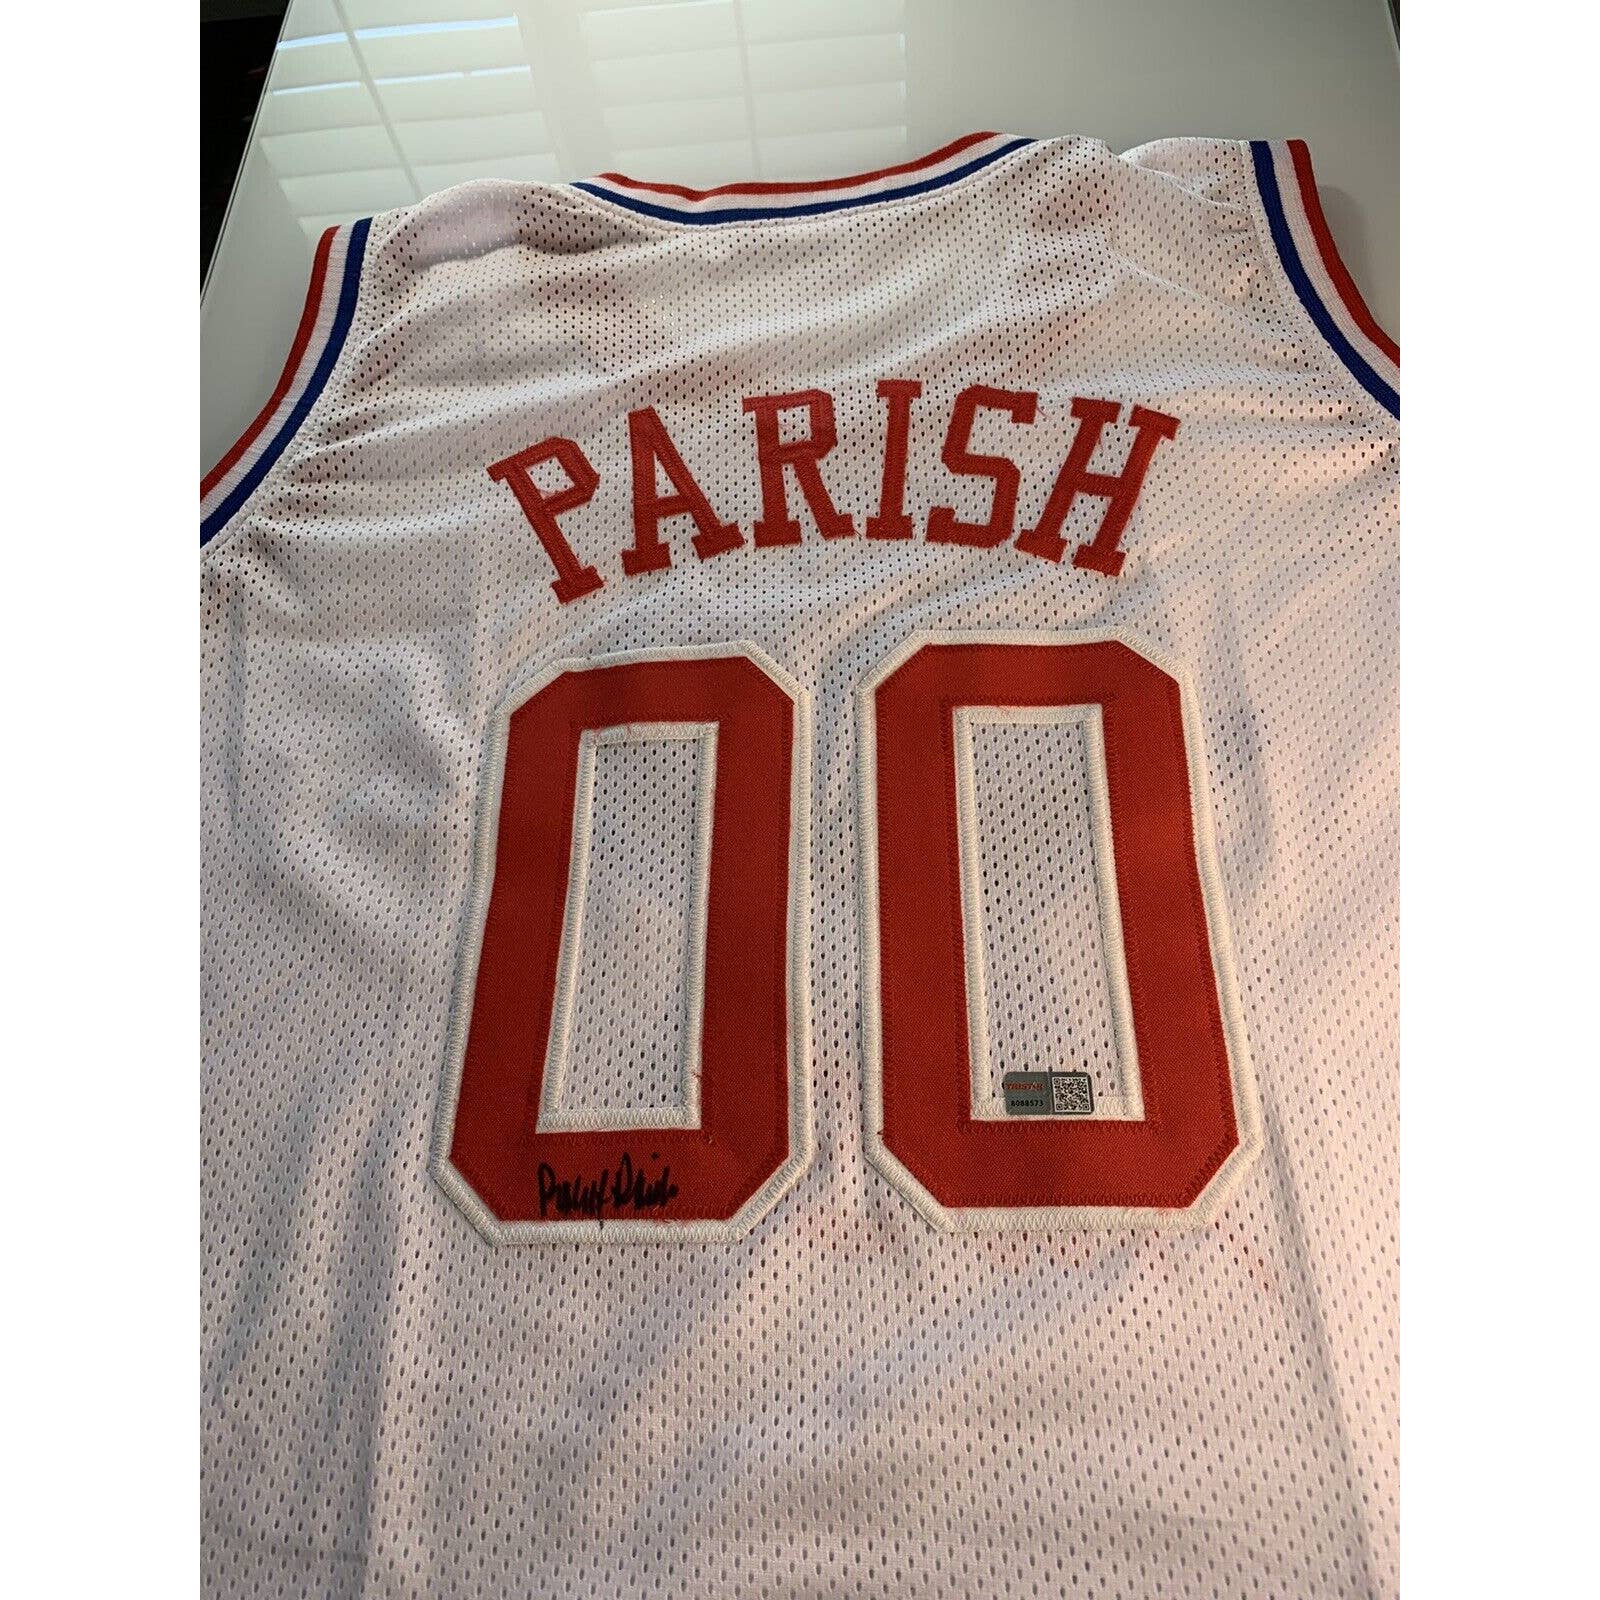 Robert Parish Autographed/Signed Jersey TRISTAR Boston Celtics All Star HOF - TreasuresEvolved